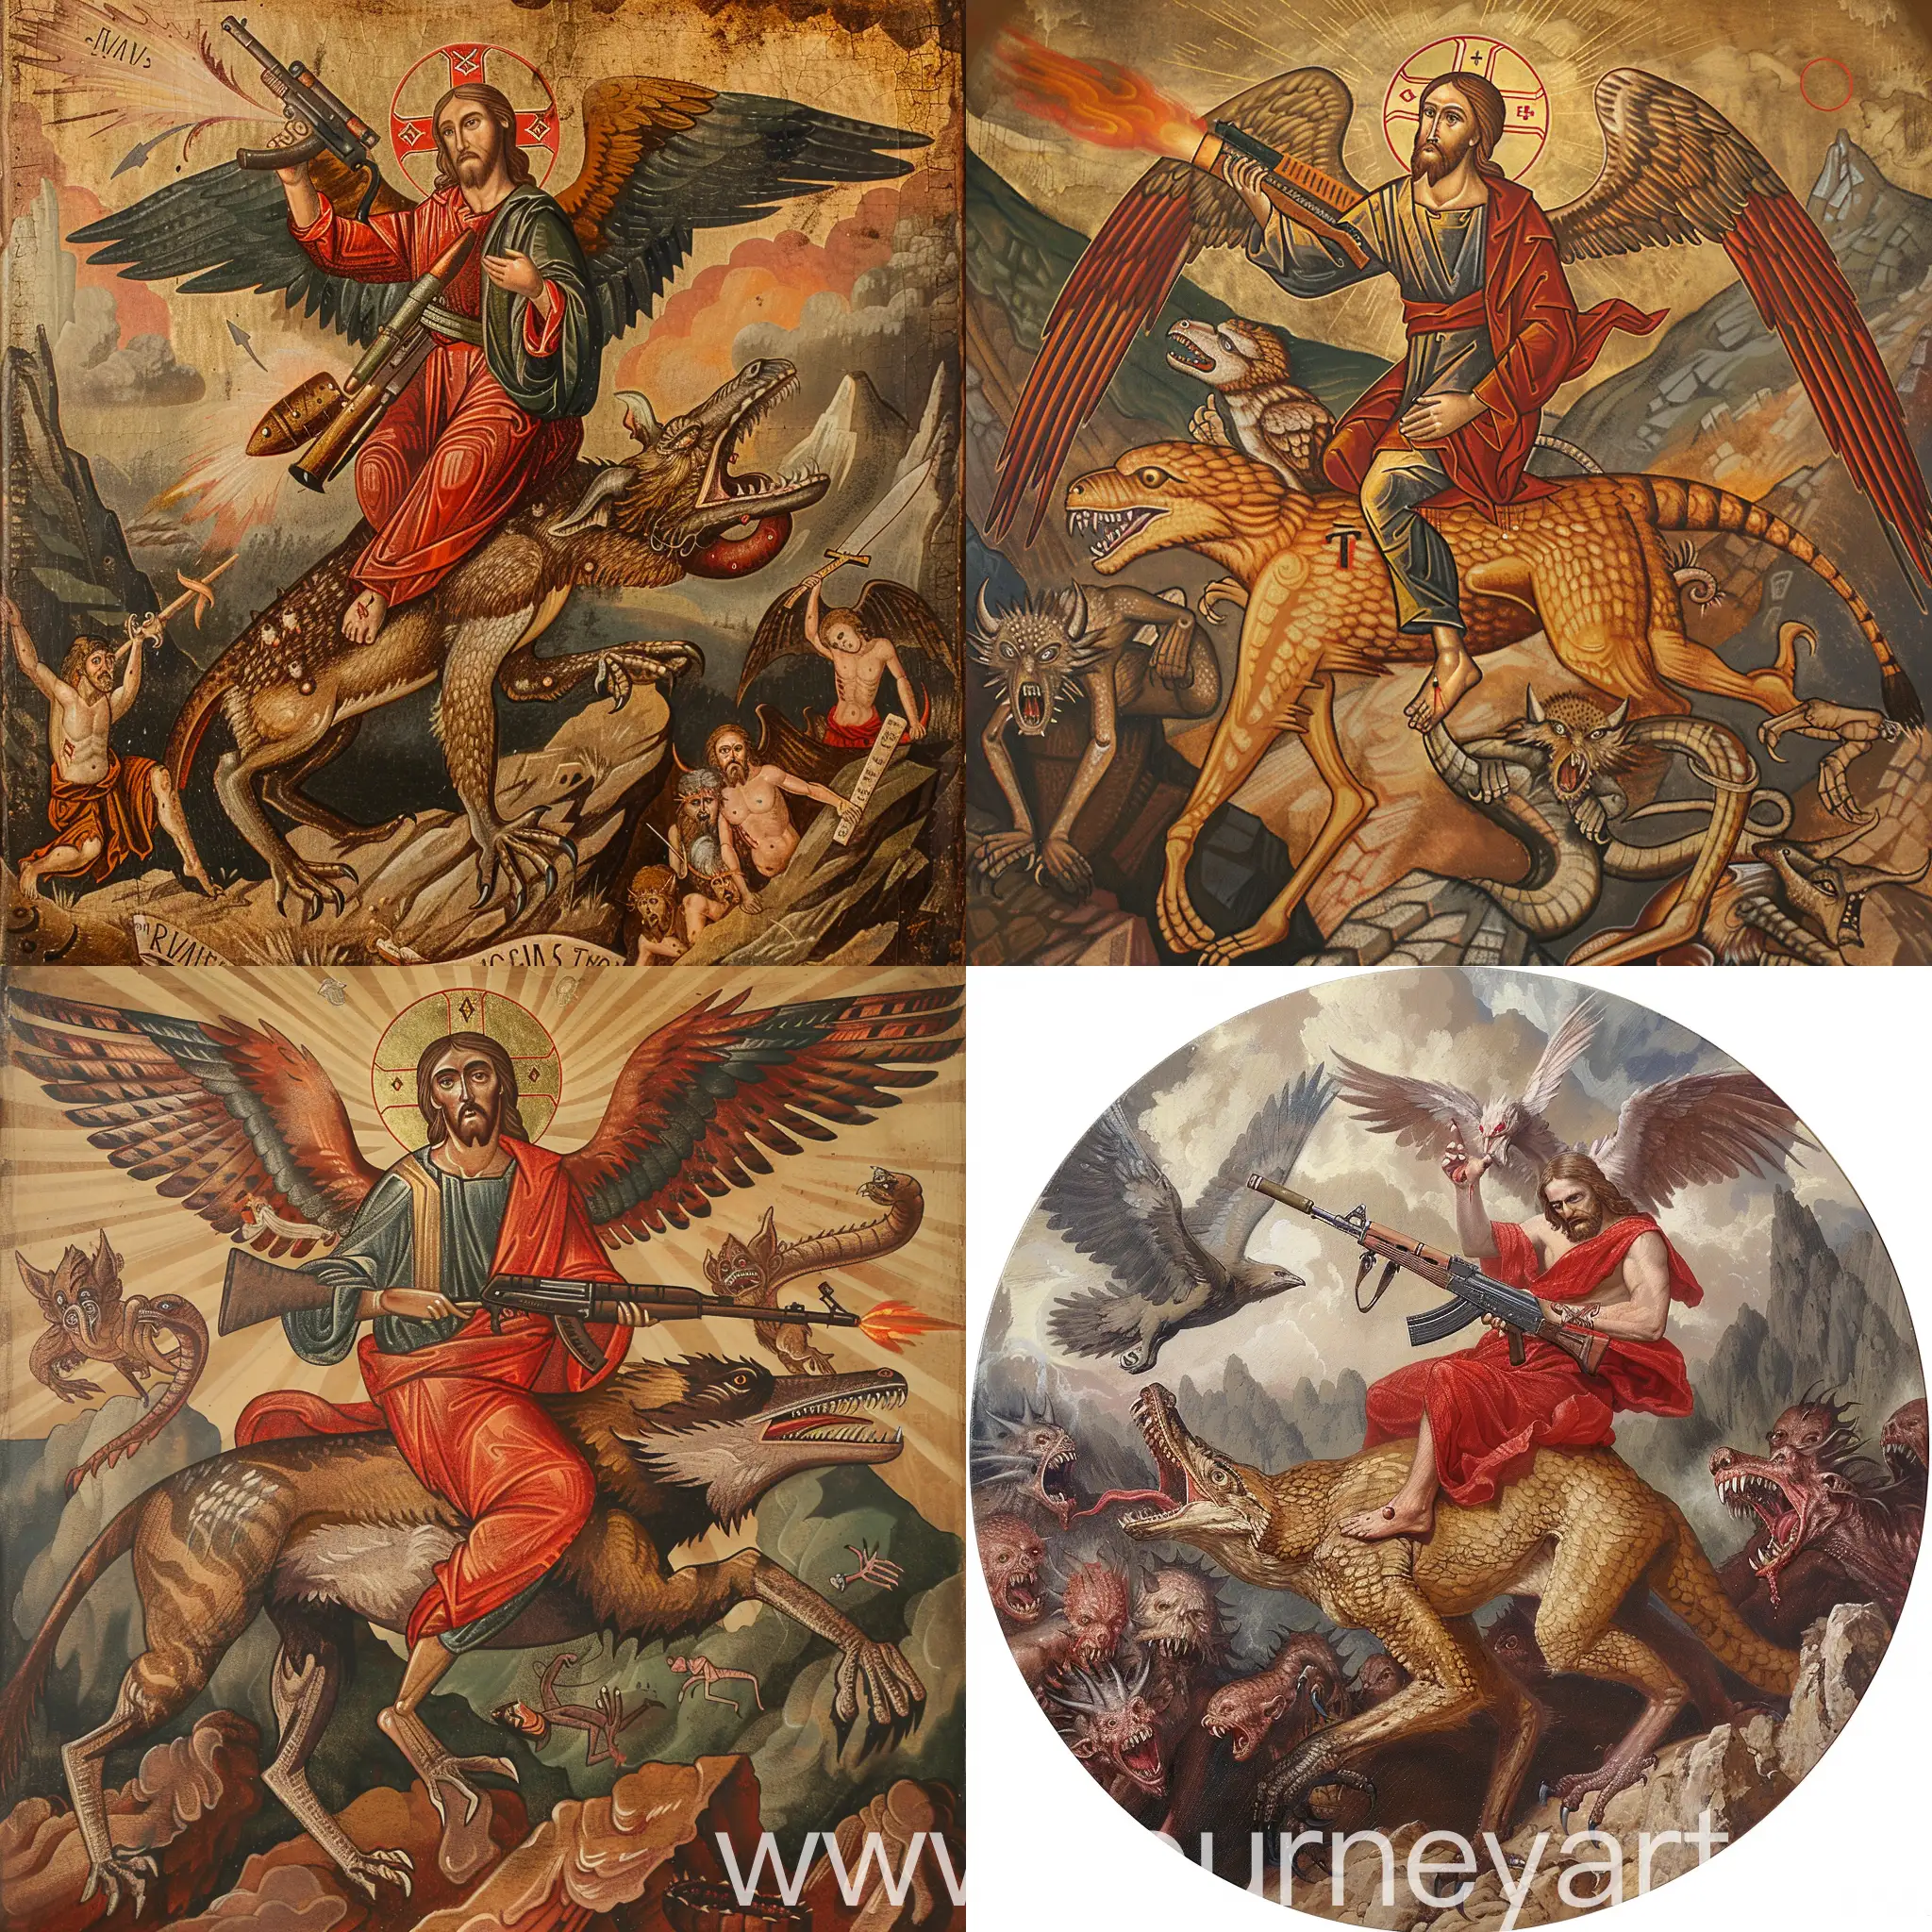 Apocalyptic-Jesus-Battle-Against-Demonic-Hordes-with-RPG7-Riding-Raptor